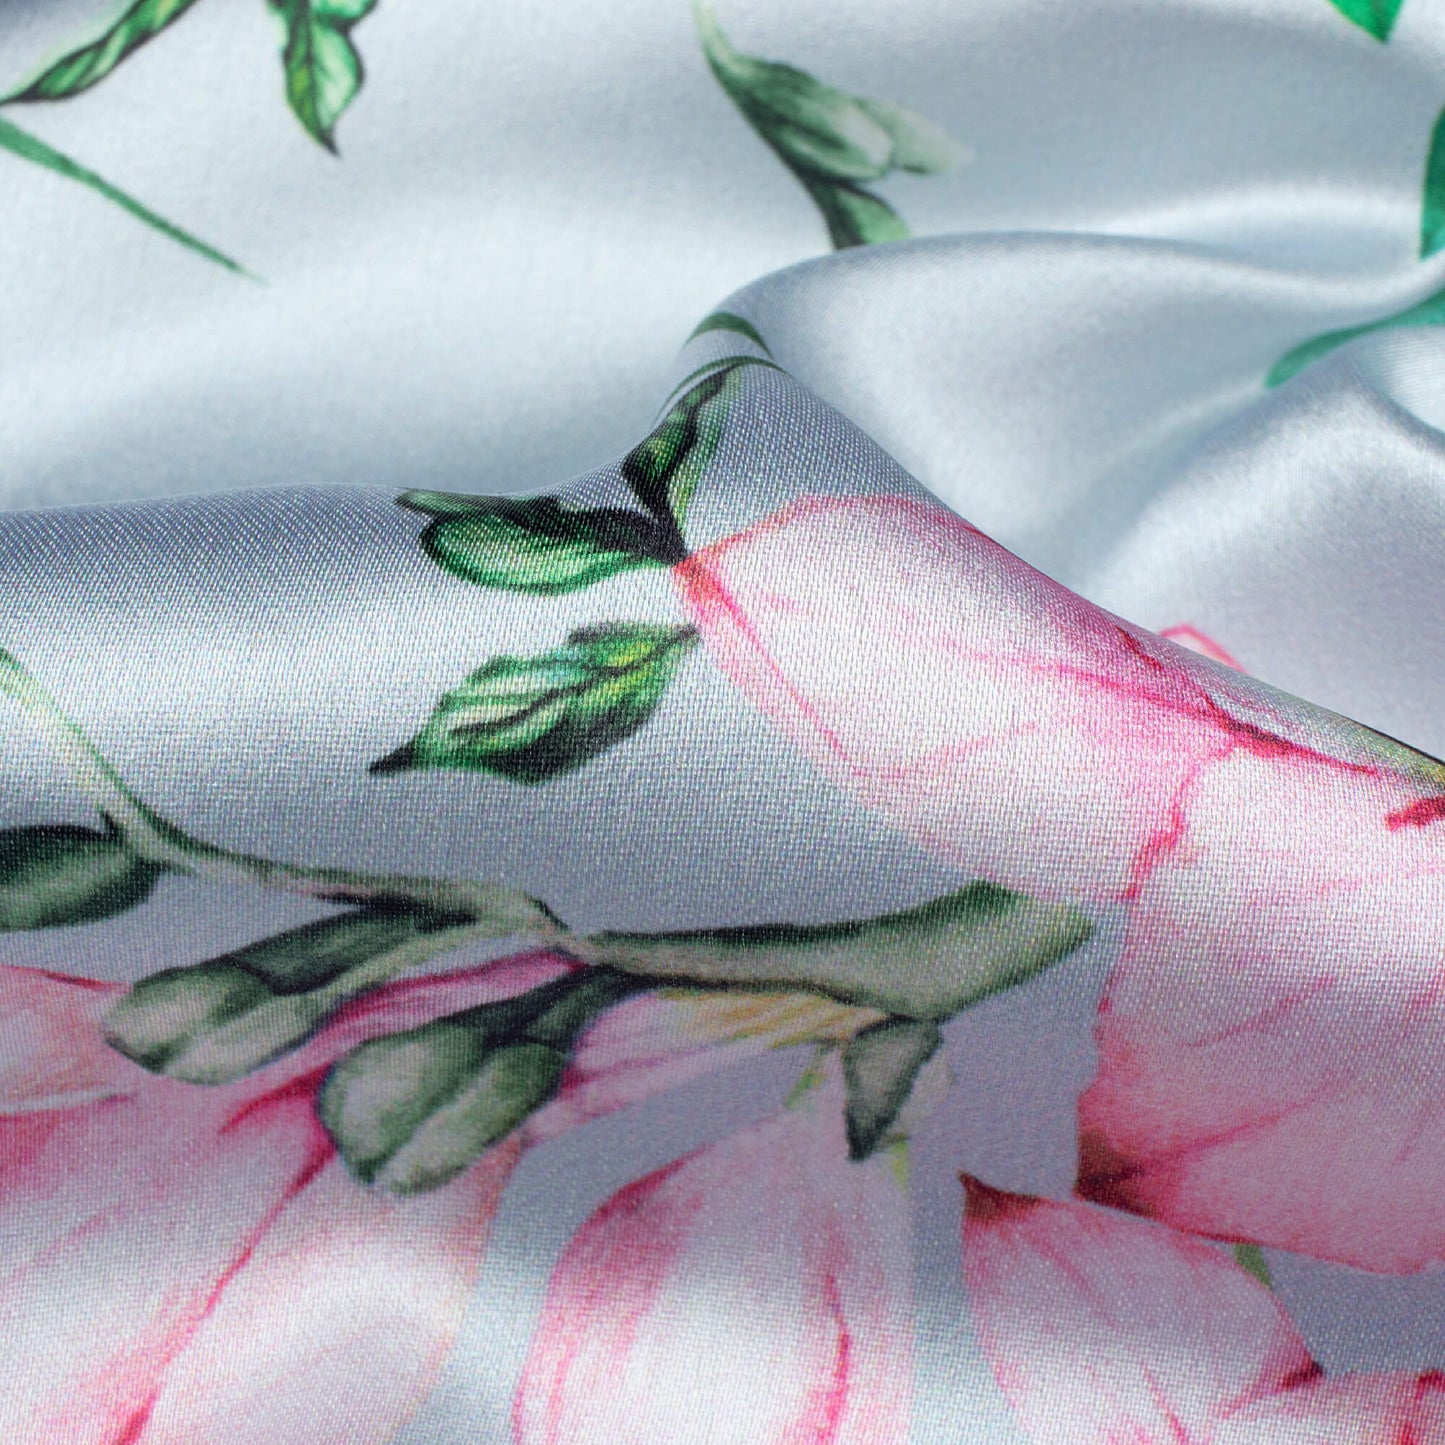 Pewter Grey And Blush Pink Floral Pattern Digital Print Japan Satin Fabric